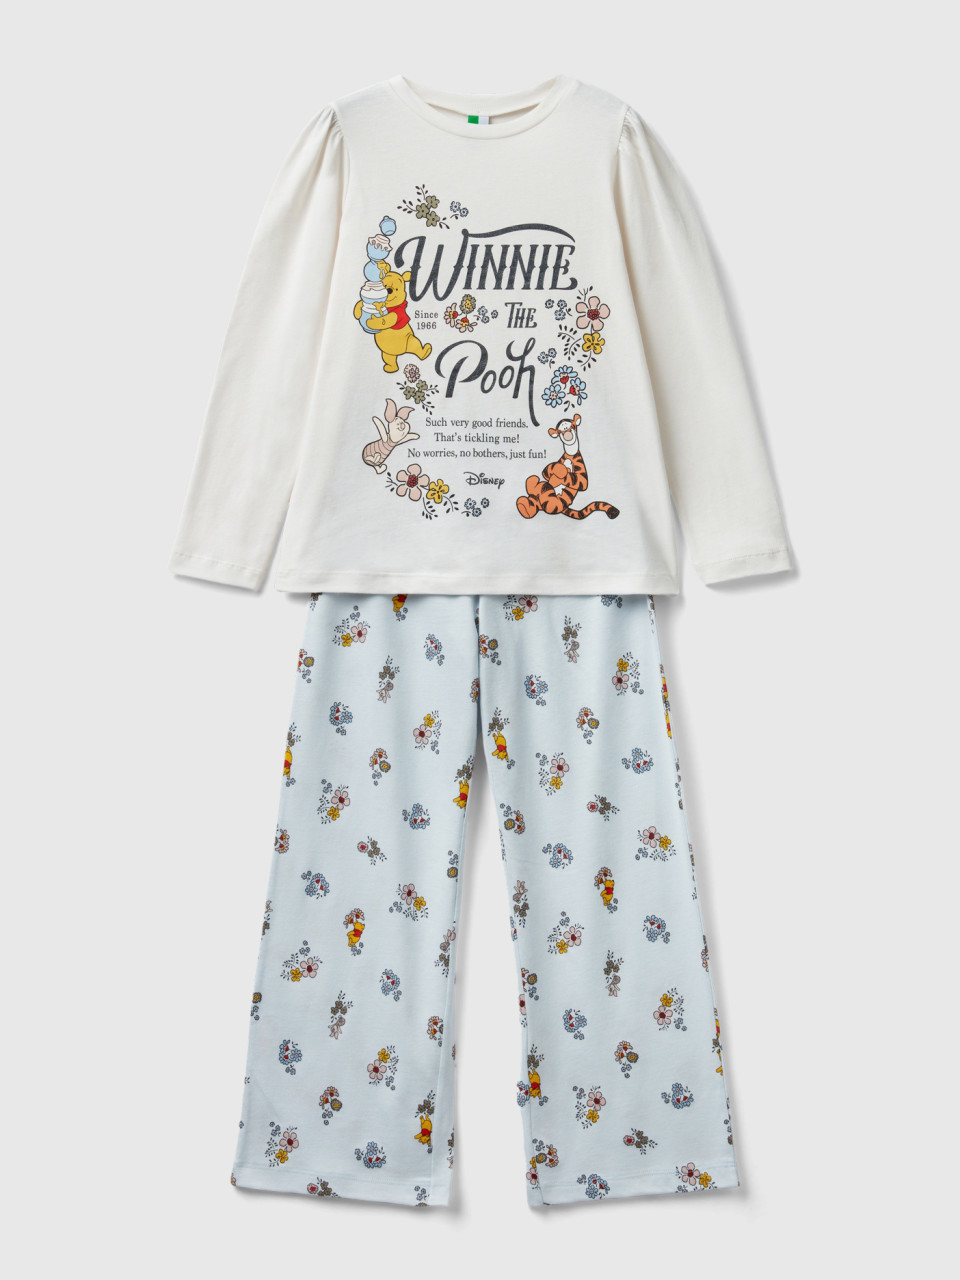 Benetton, Long ©disney Winnie The Pooh Pyjamas, Creamy White, Kids